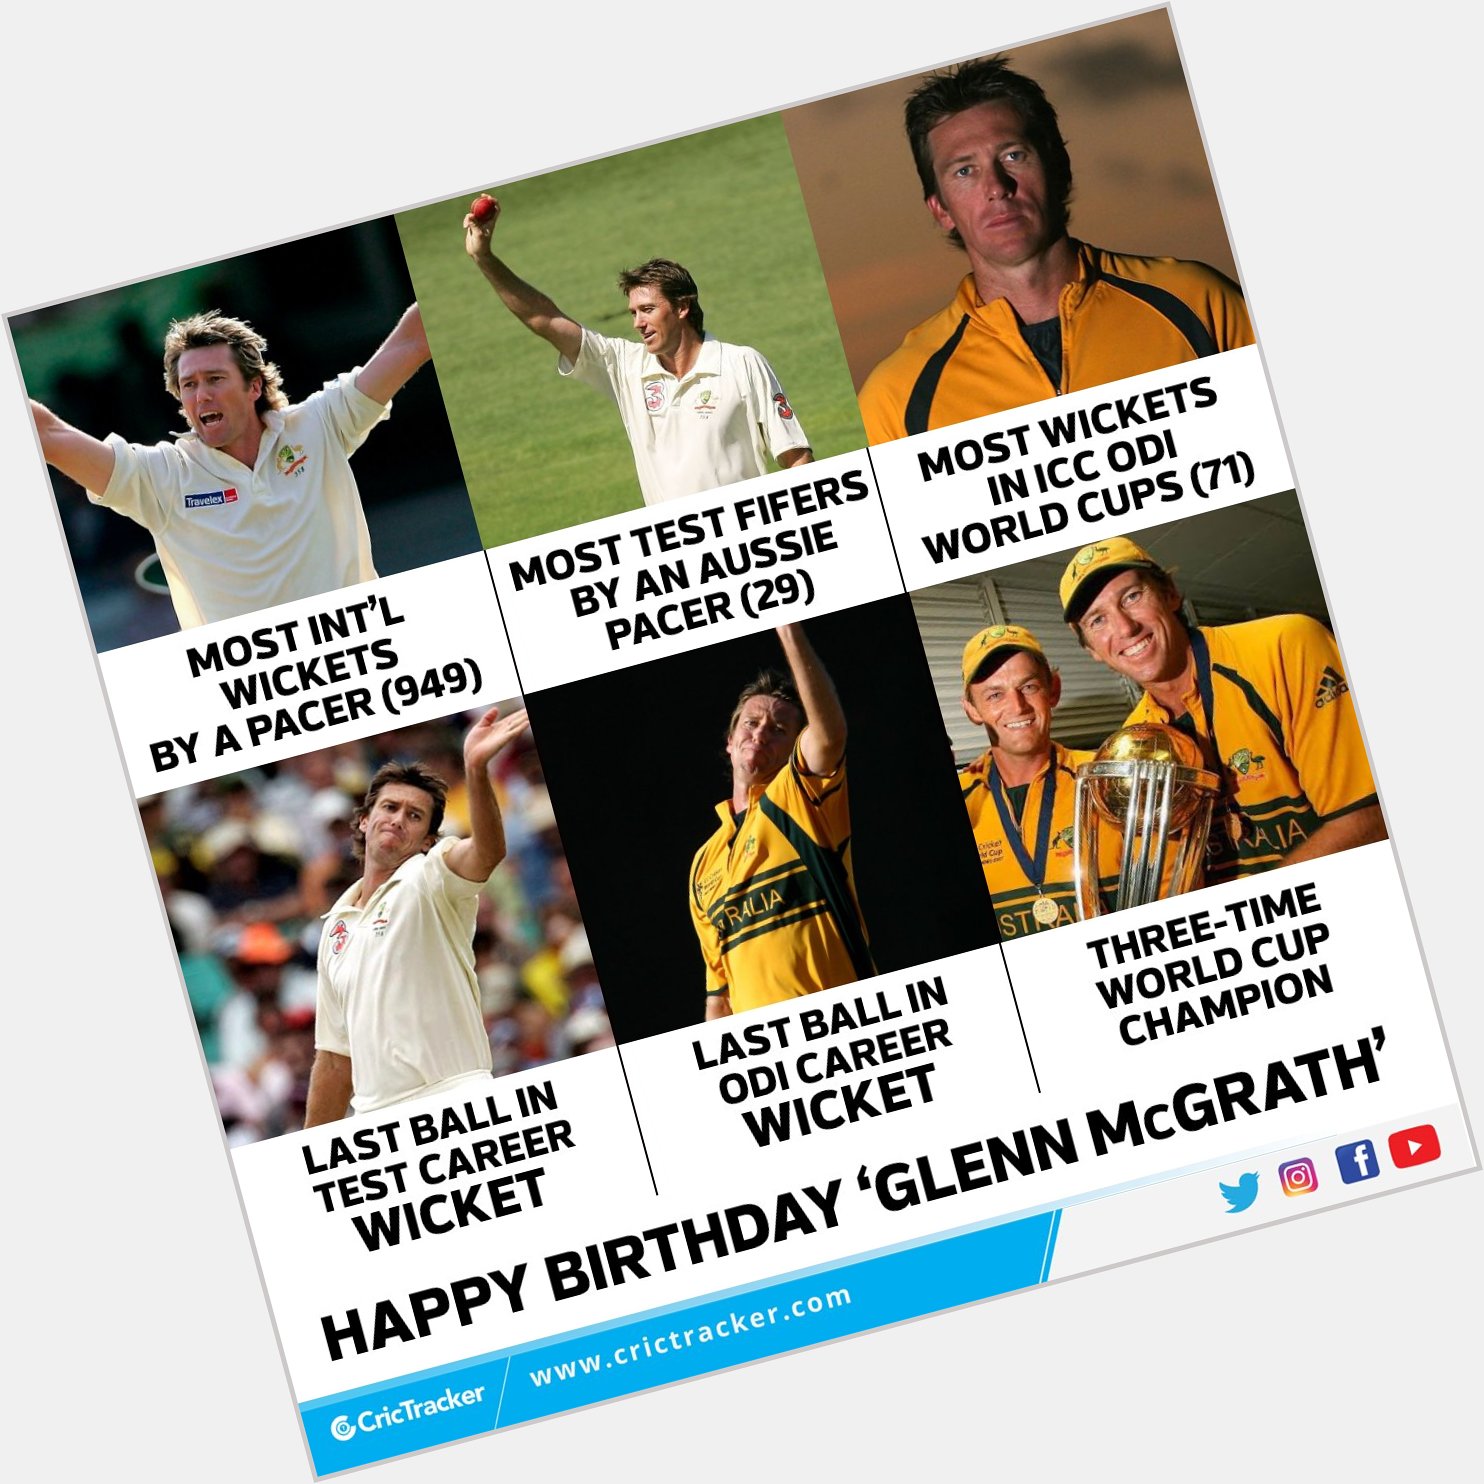 Join us in wishing Glenn McGrath a very happy birthday.   